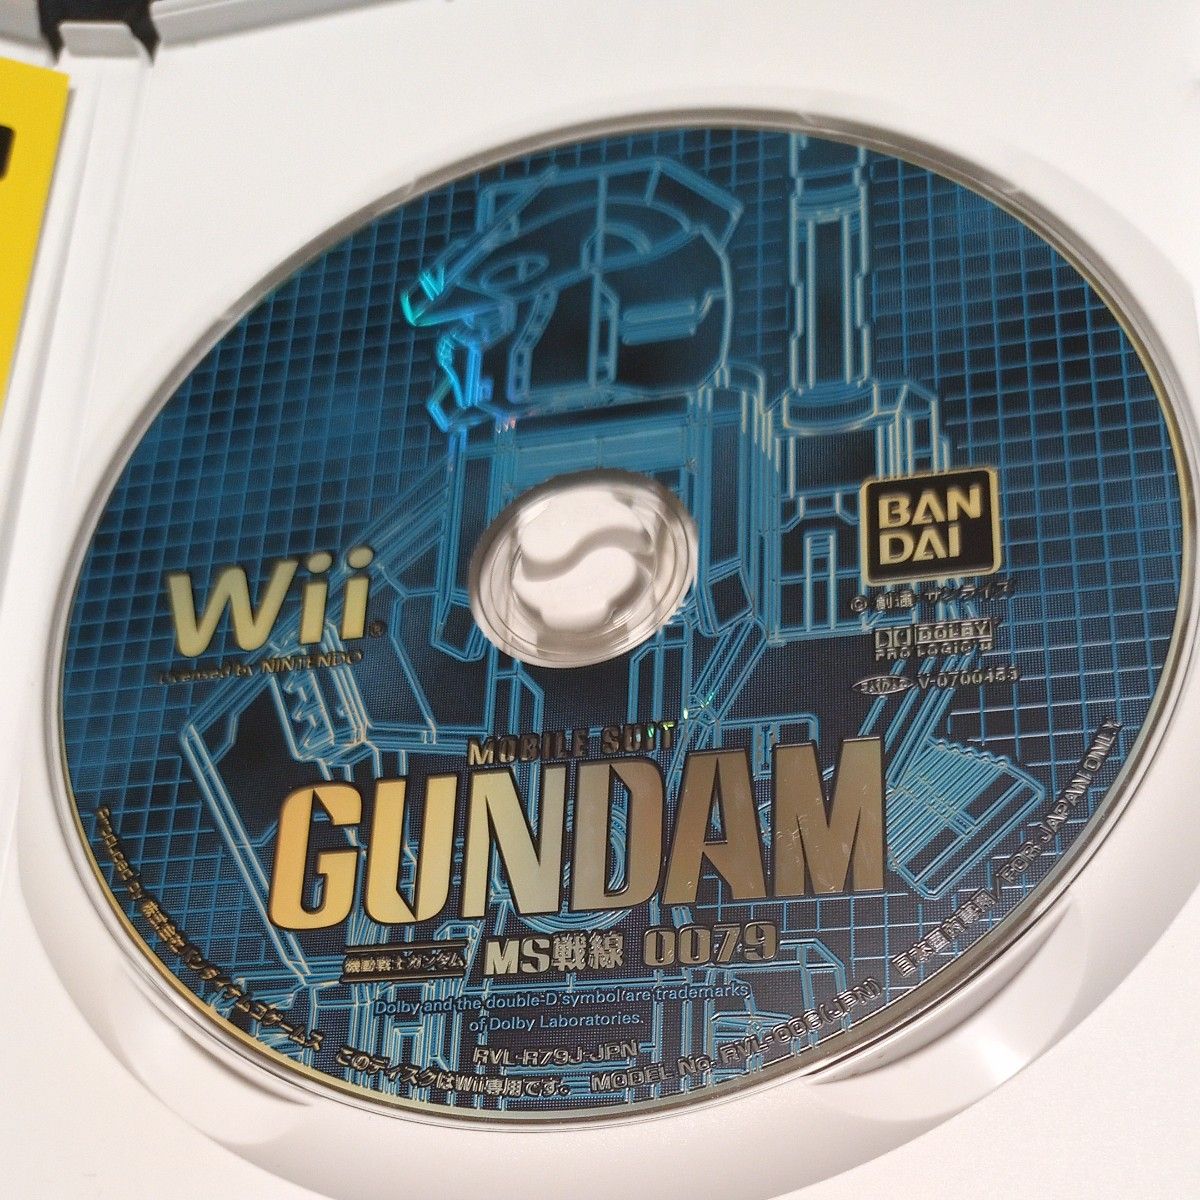 【Wii】 機動戦士ガンダム MS戦線0079